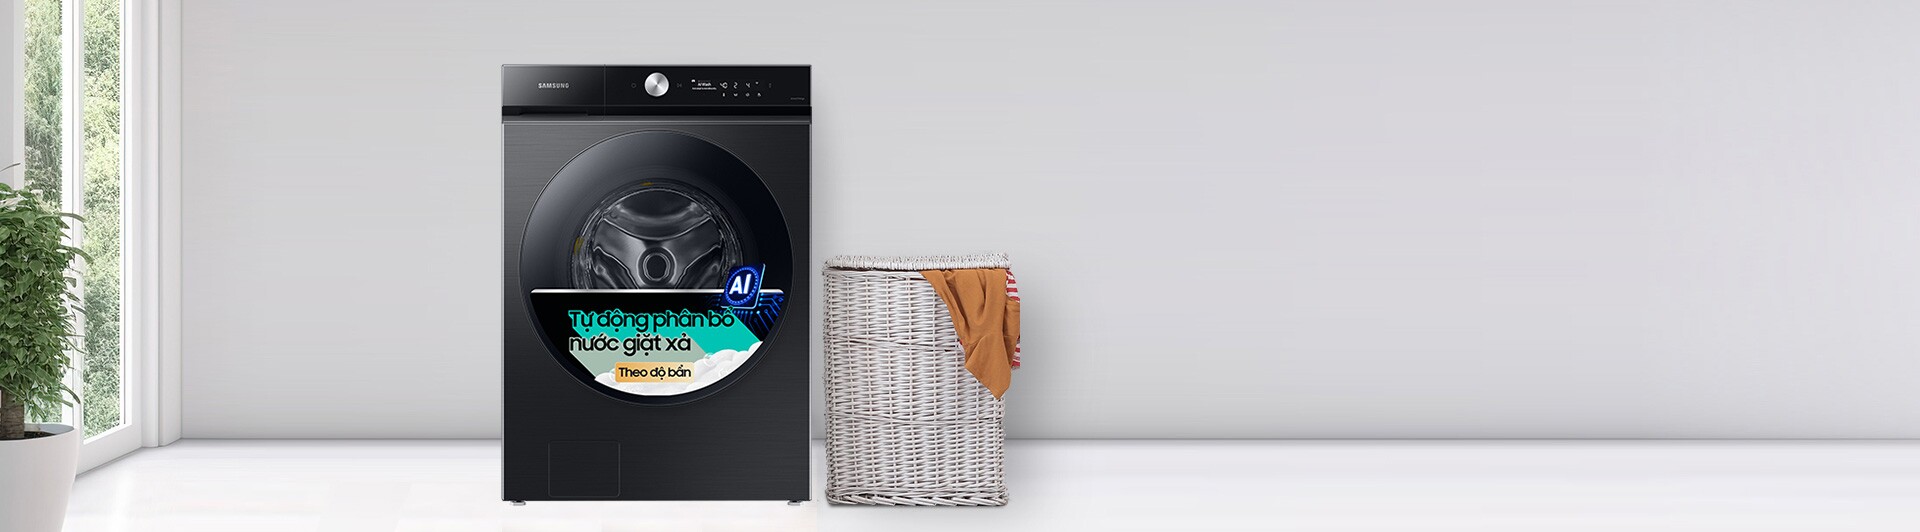 Máy giặt Samsung Inverter 24 kg WF24B9600KV/SV